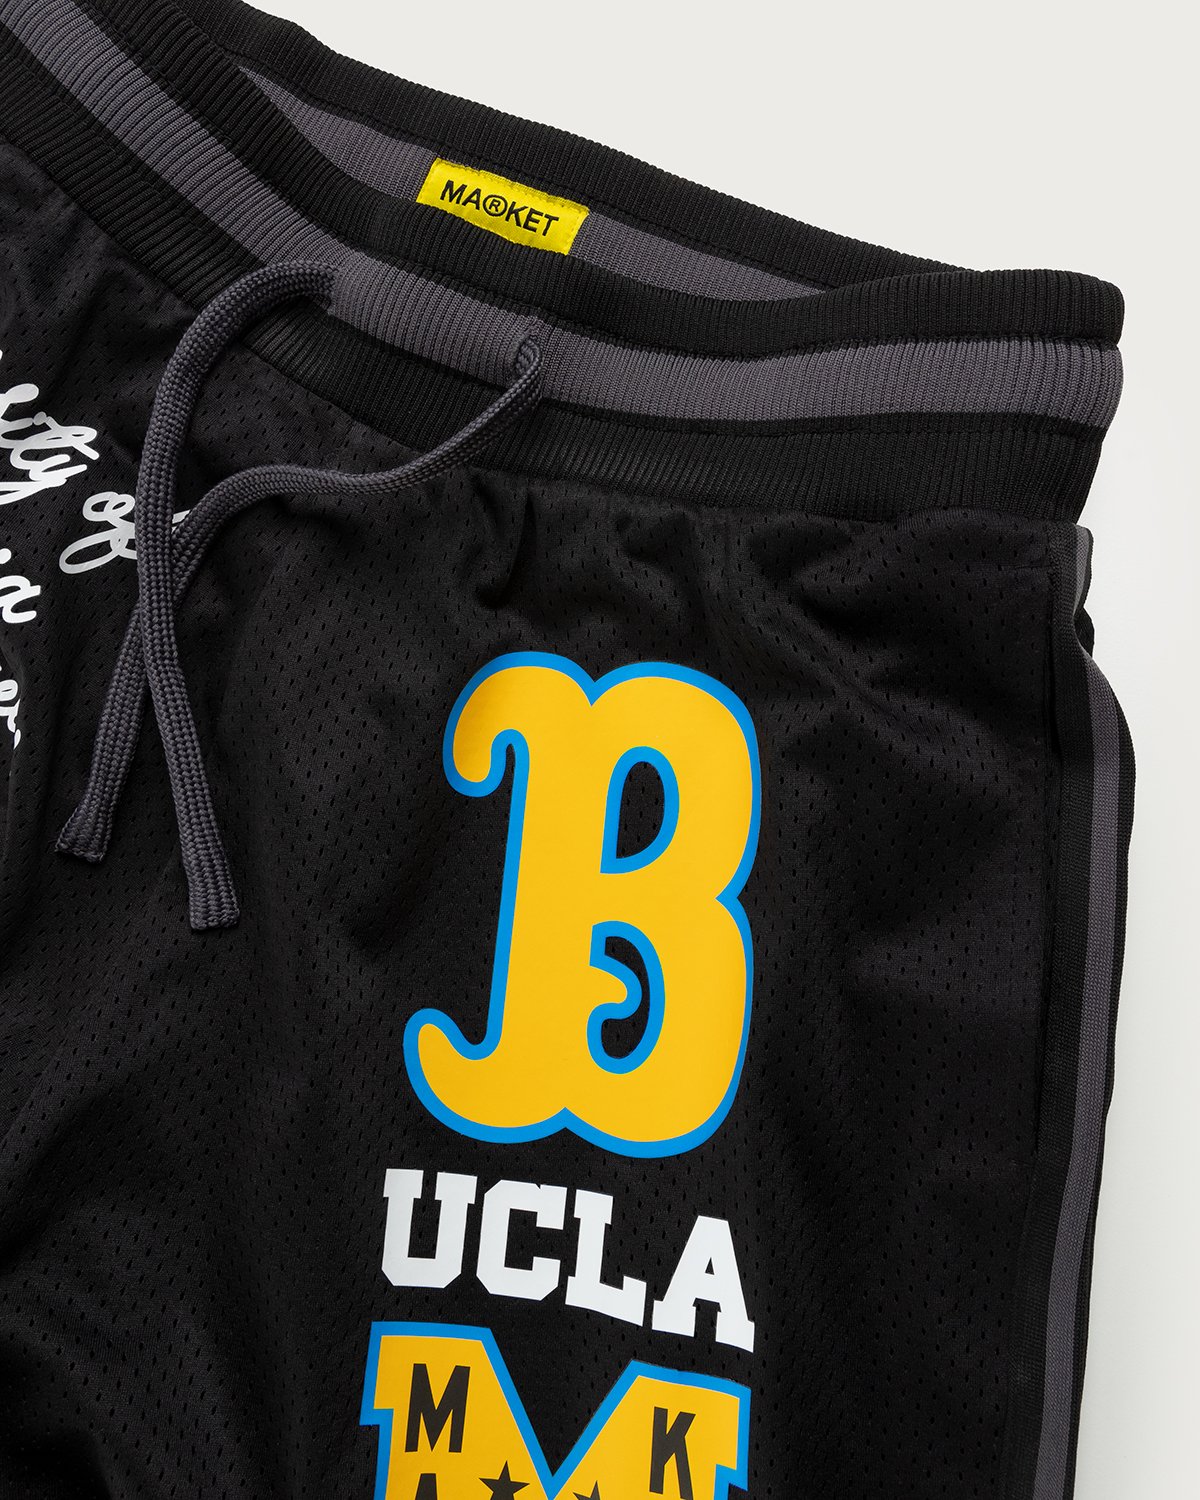 Market x UCLA x Highsnobiety - HS Sports Mesh Bruin Shorts Black - Clothing - Black - Image 3